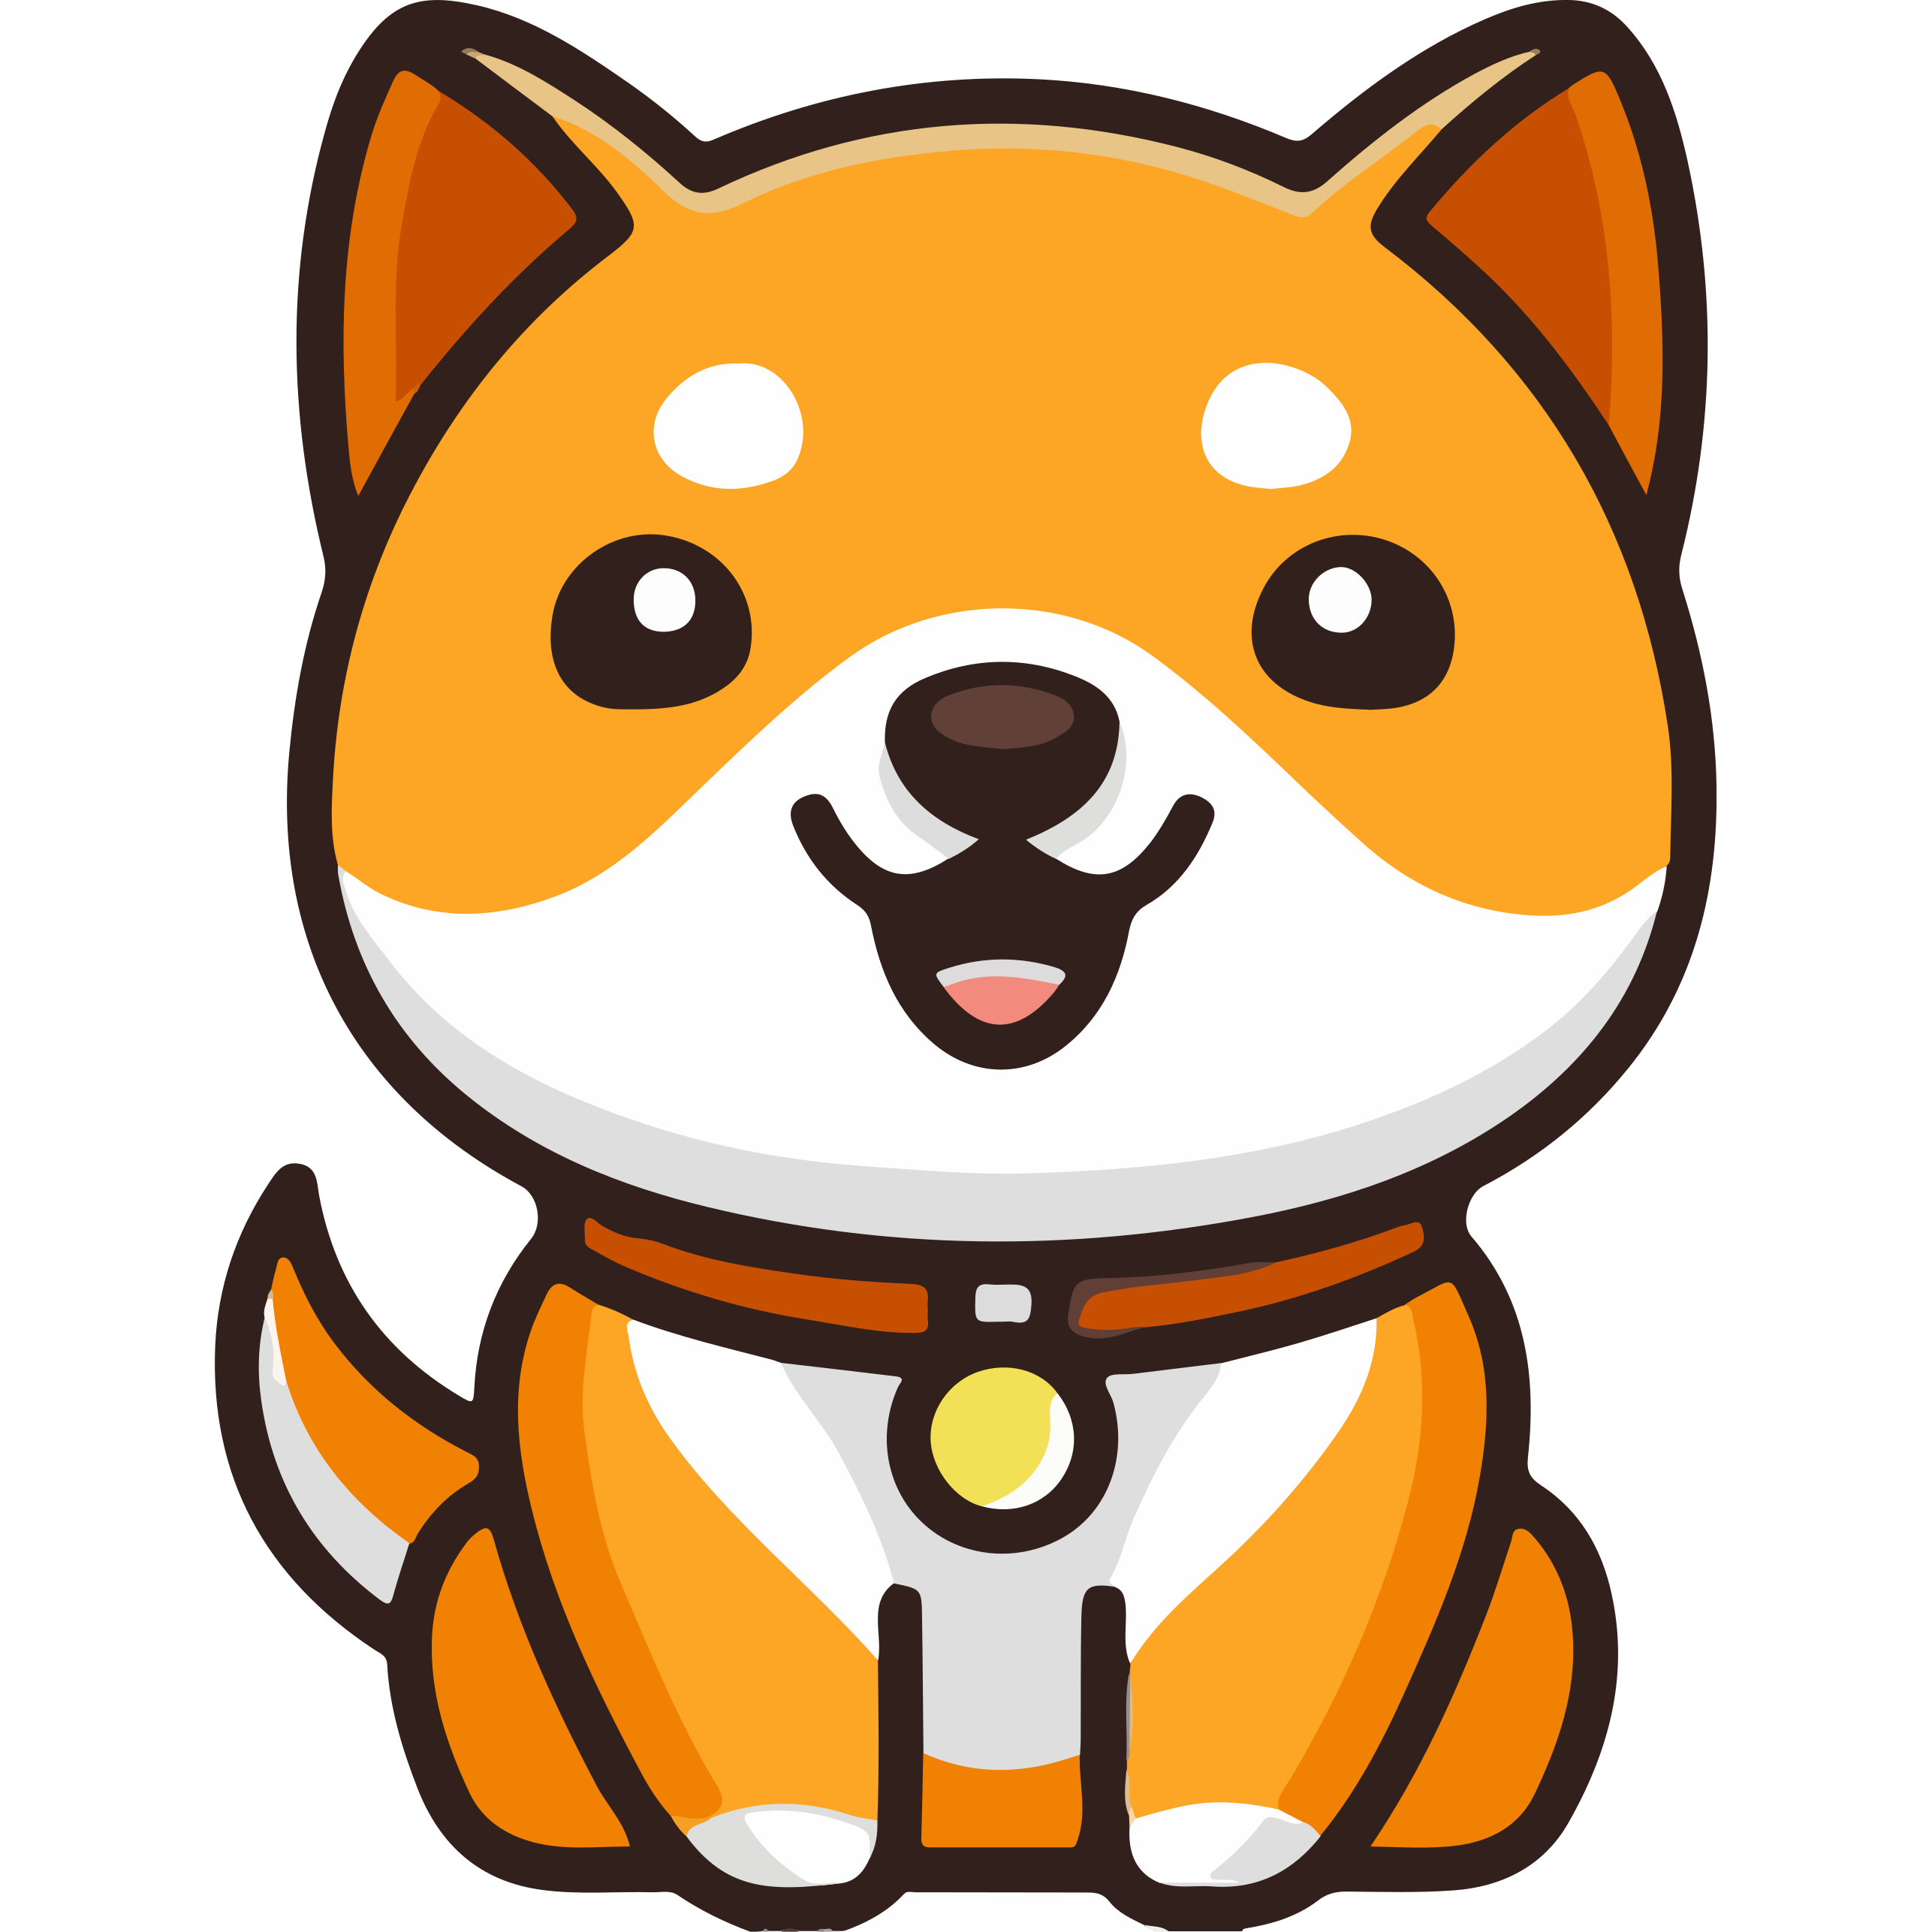 Baby Doge Coin (BabyDoge) Logo .SVG and .PNG Files Download